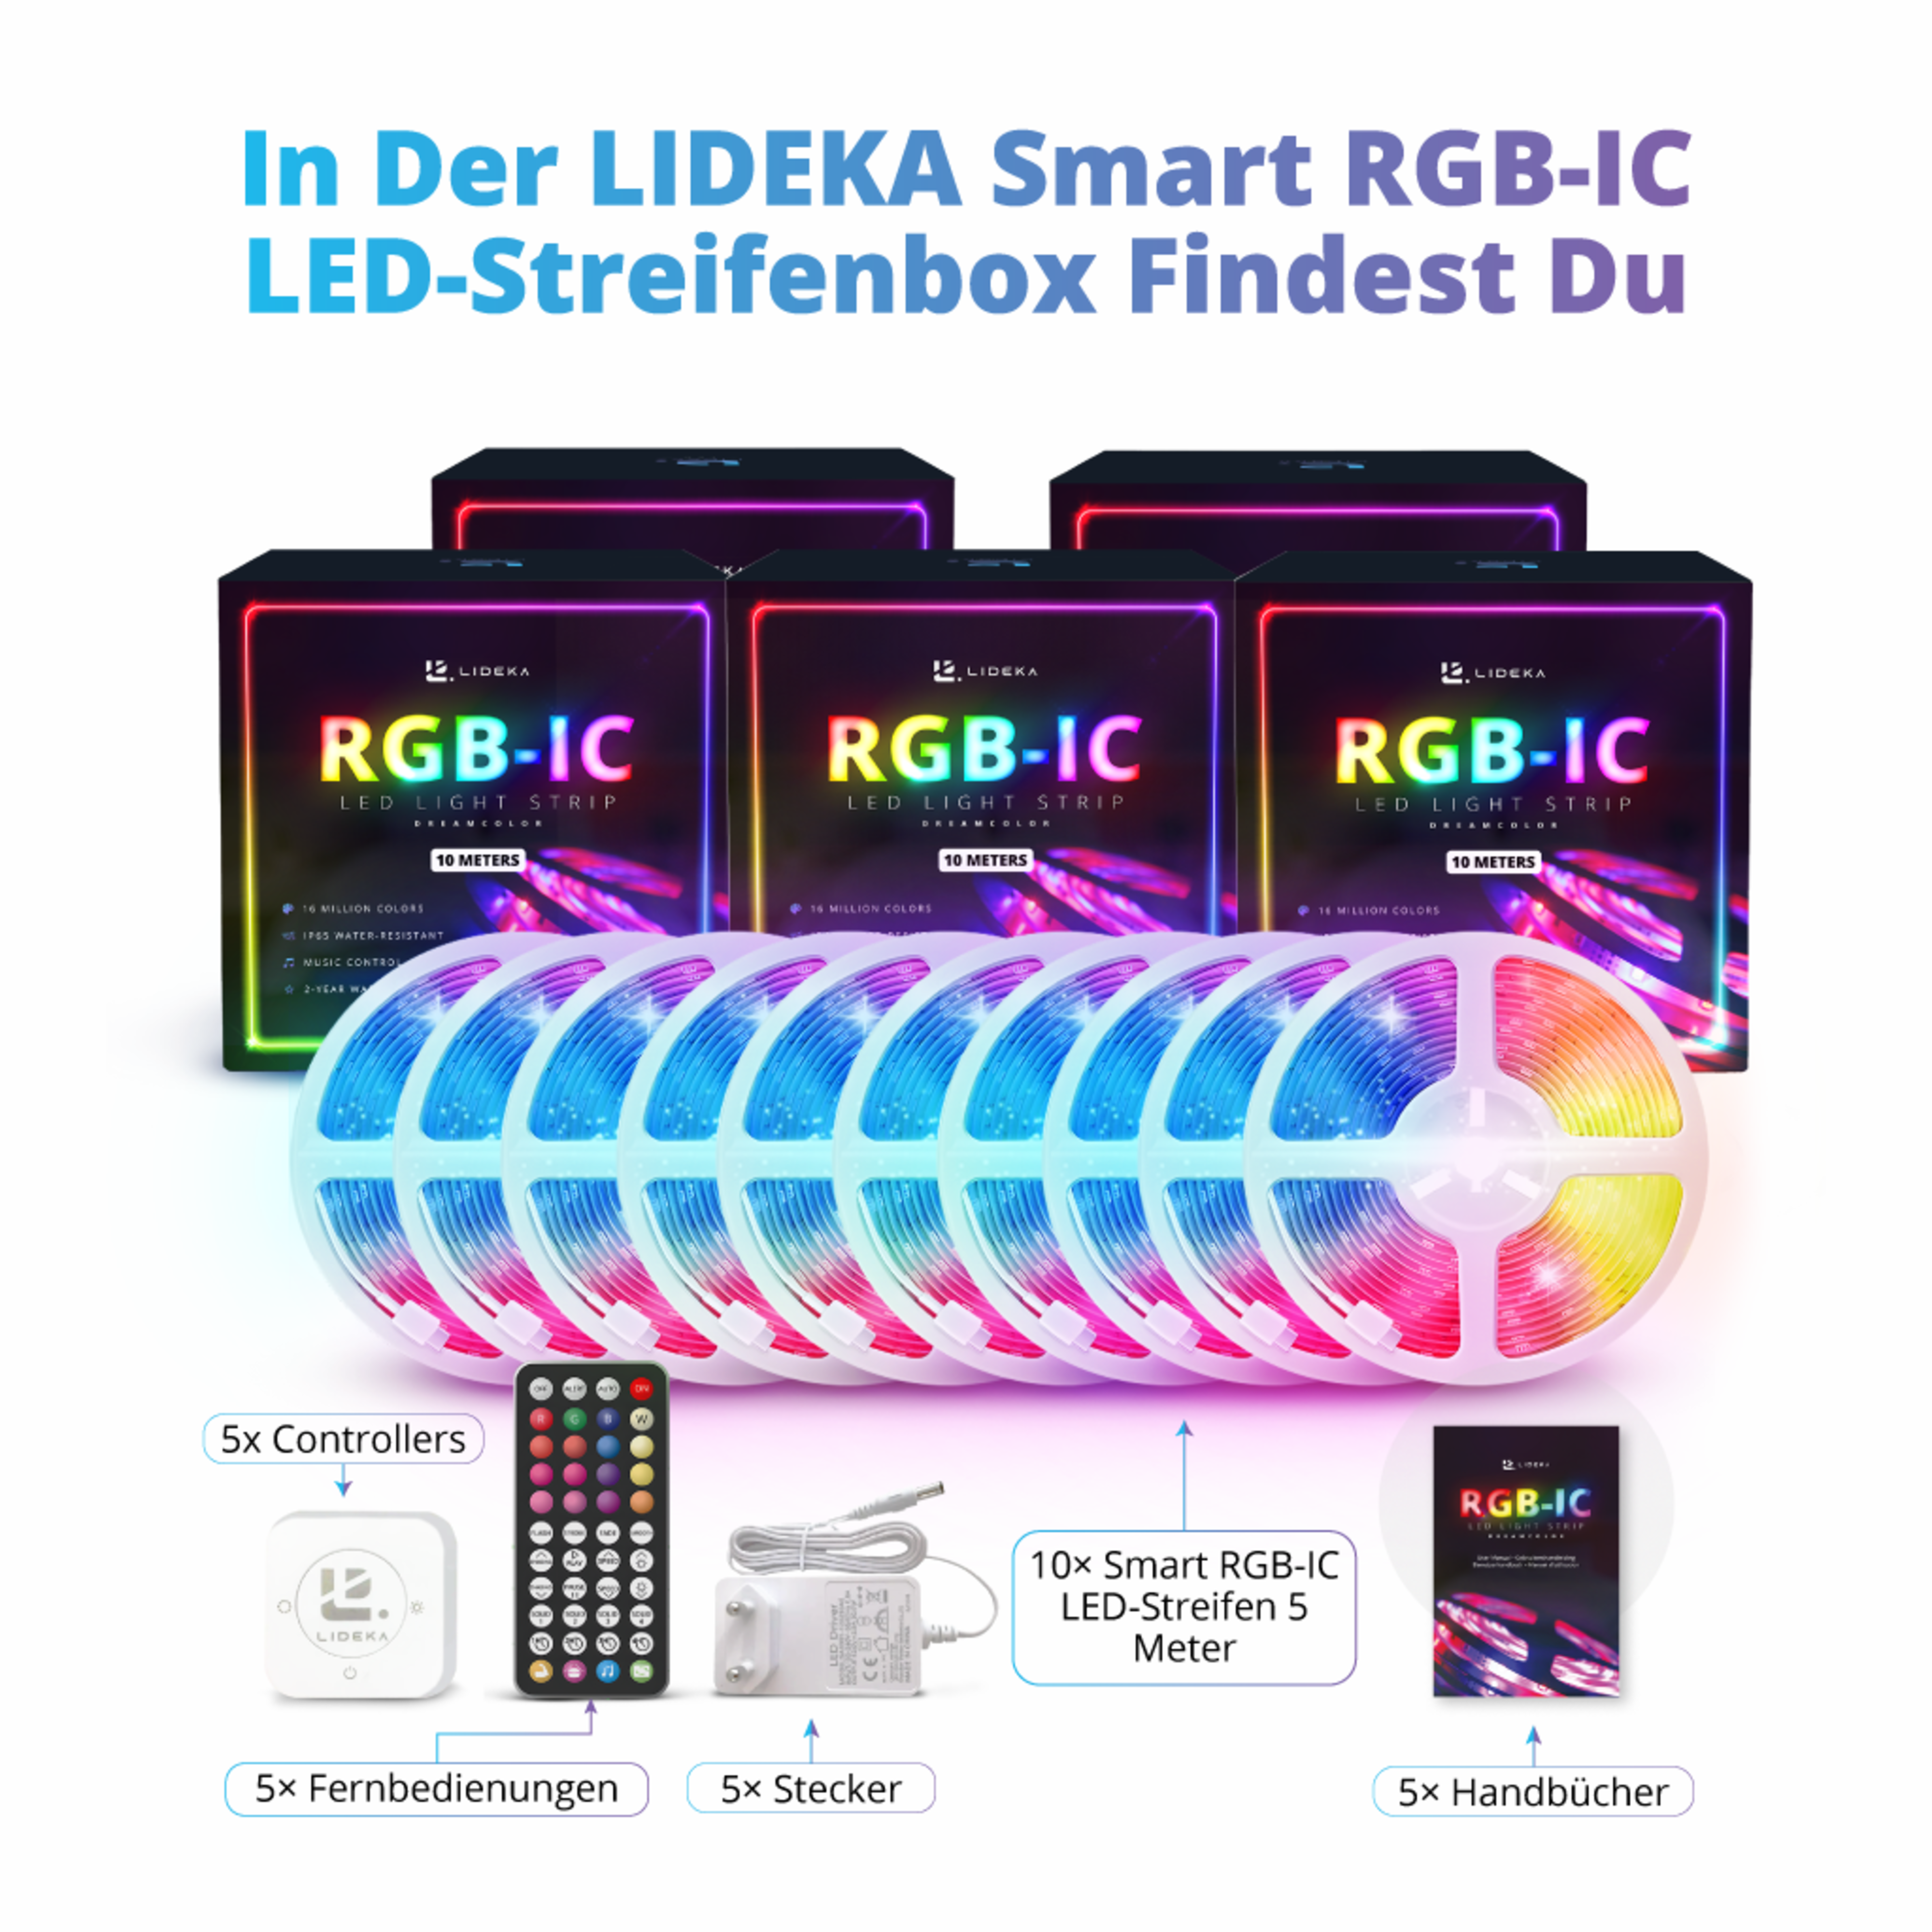 40m RGBIC Multicolors LED-Streifen LIDEKA Regenbogen strips LED